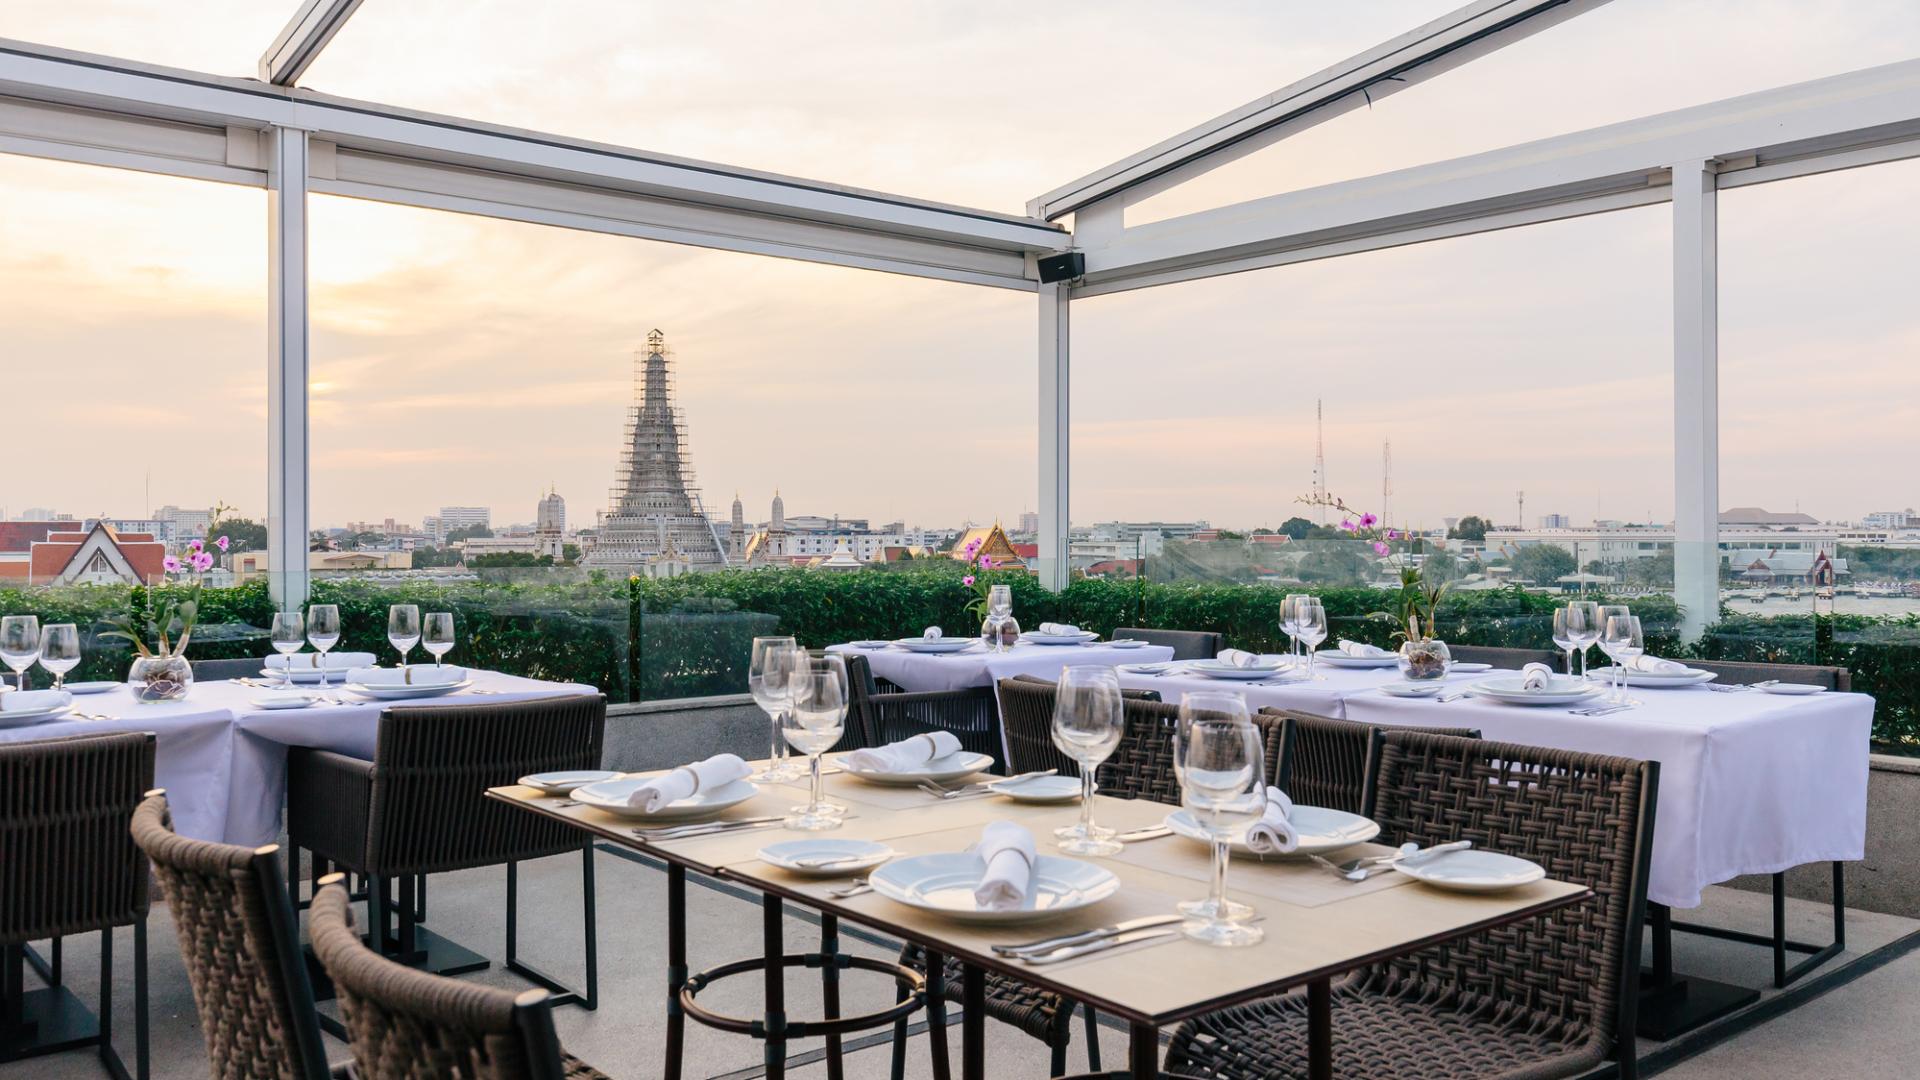 Rooftop Restaurants for Rent in Singapore